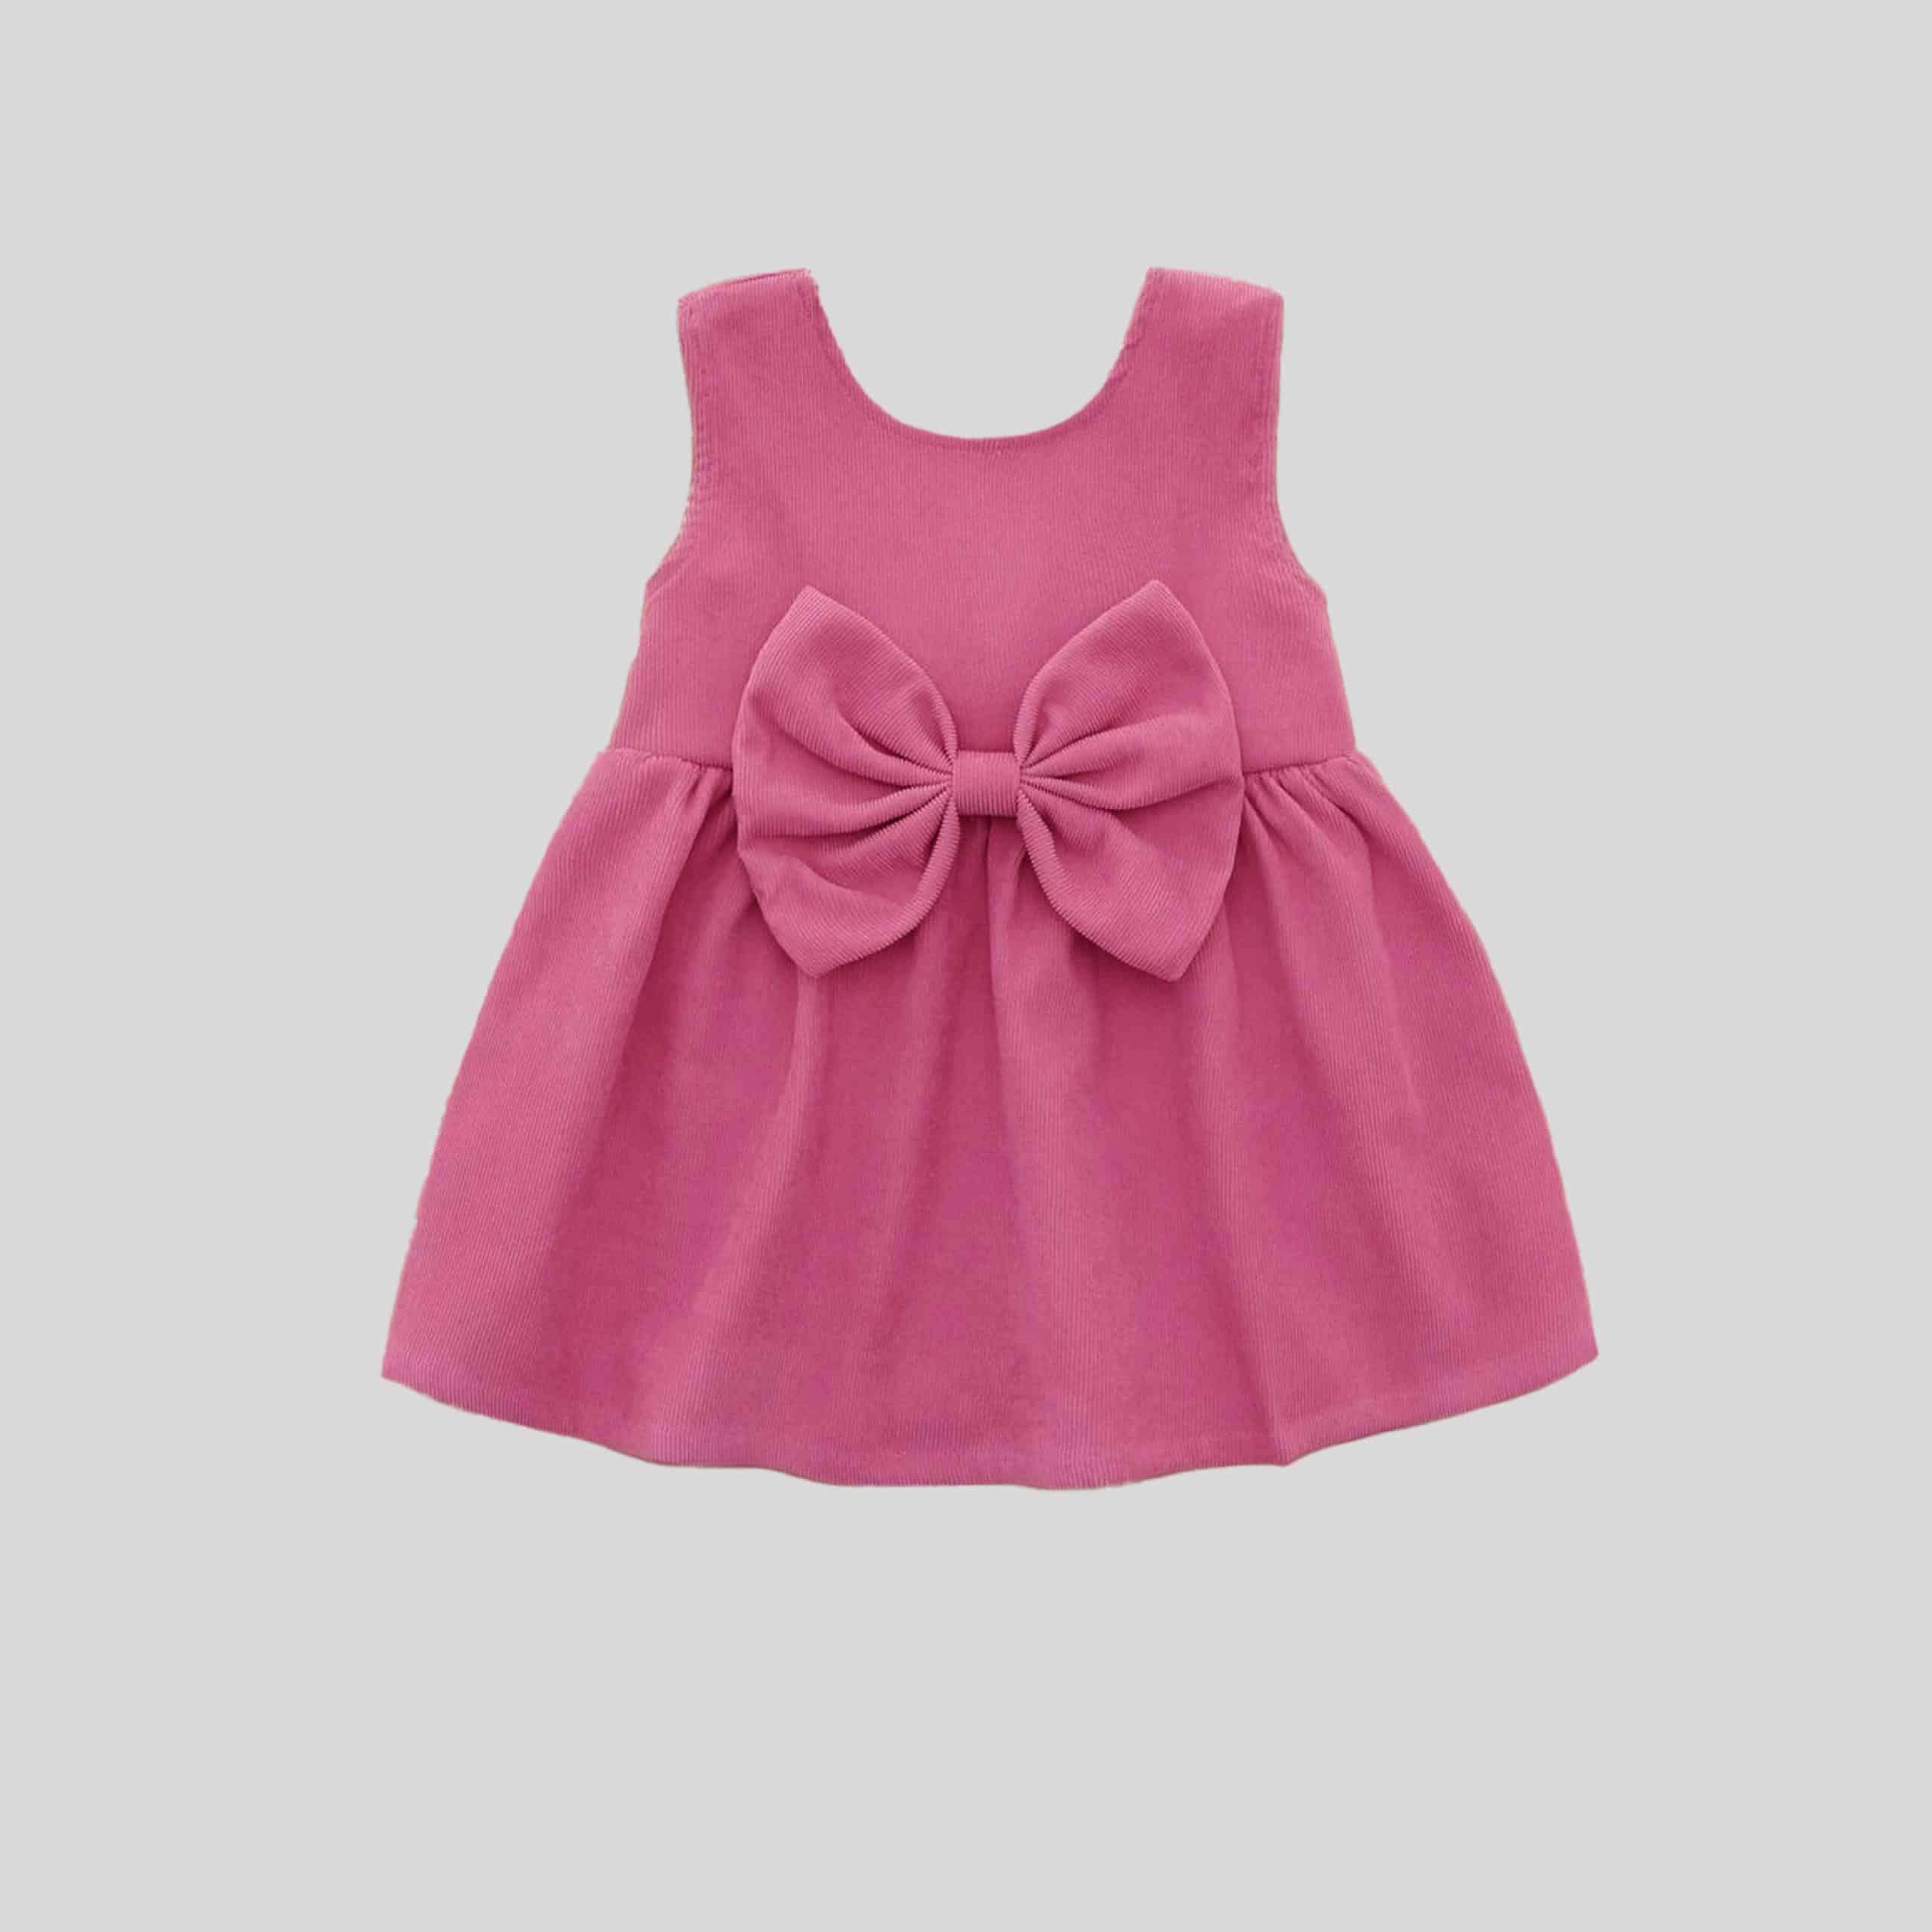 Watermelon pink sleeveless dress with bow - RKFCW151